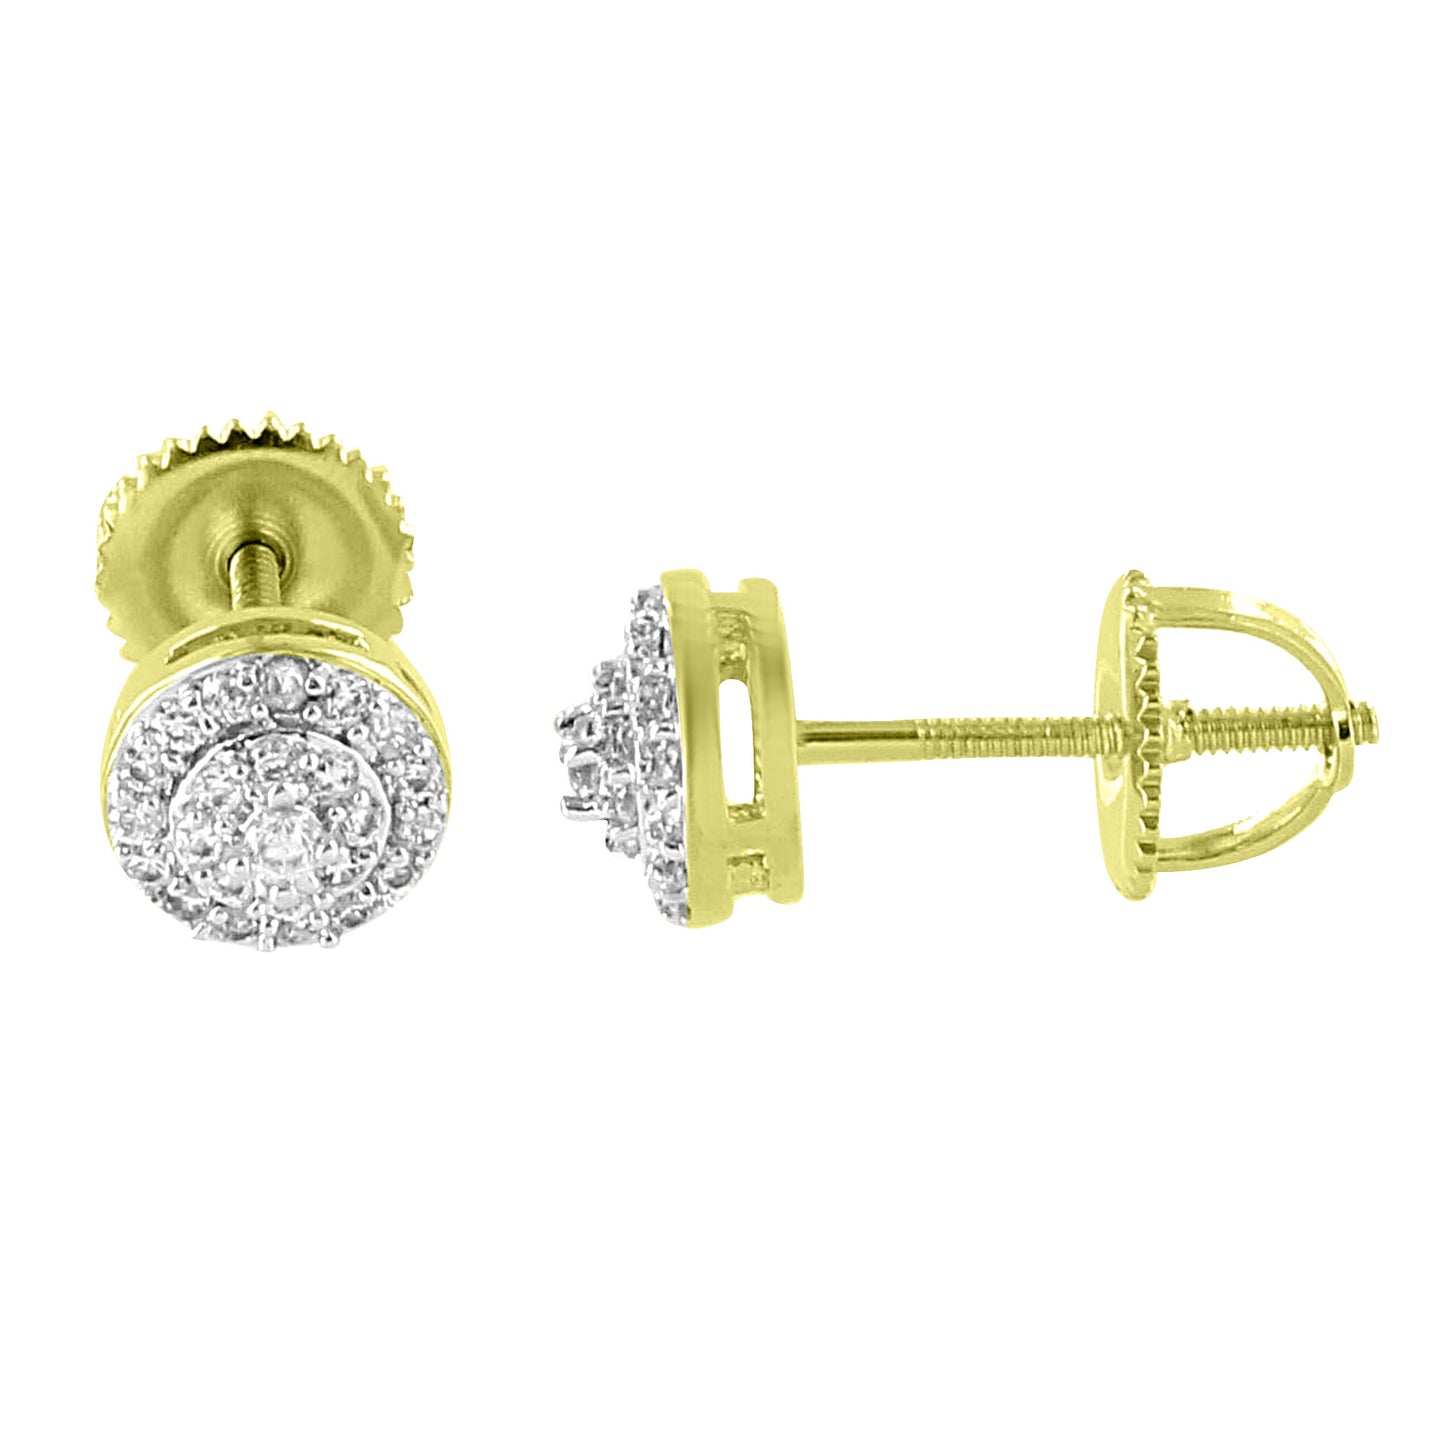 Halo Design Earrings 14K Yellow Gold  Simulated Diamonds Screw Back Studs